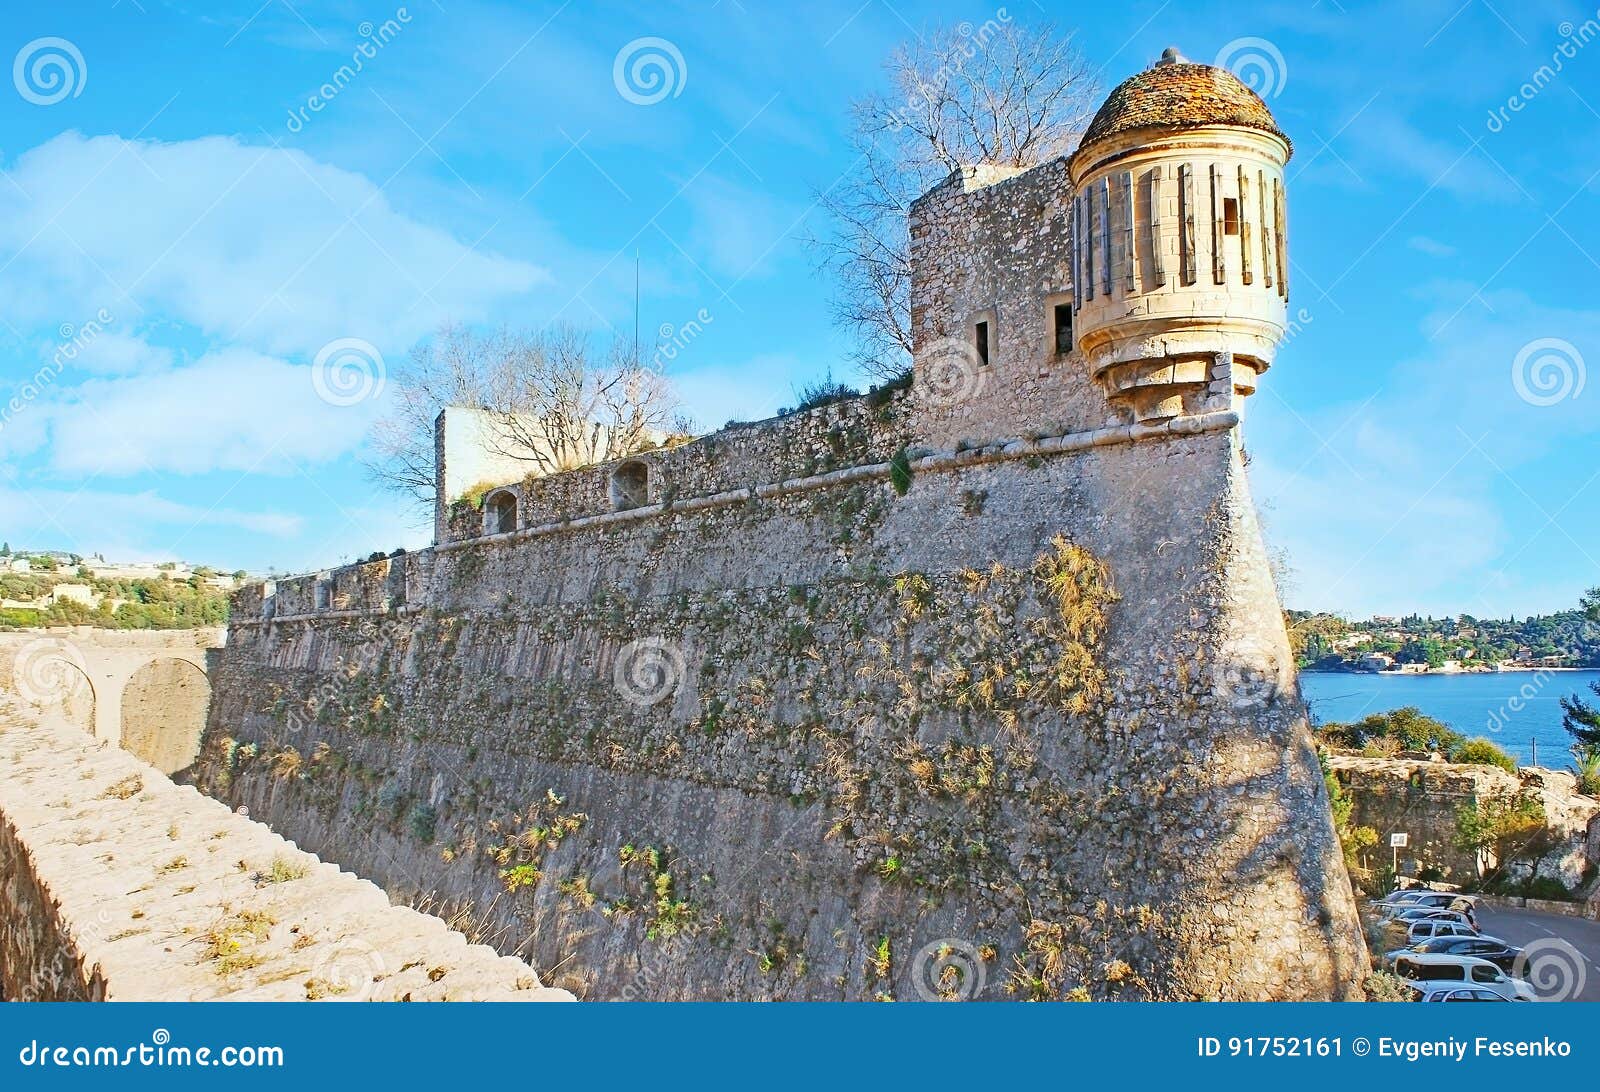 the st elme citadel in villefranche